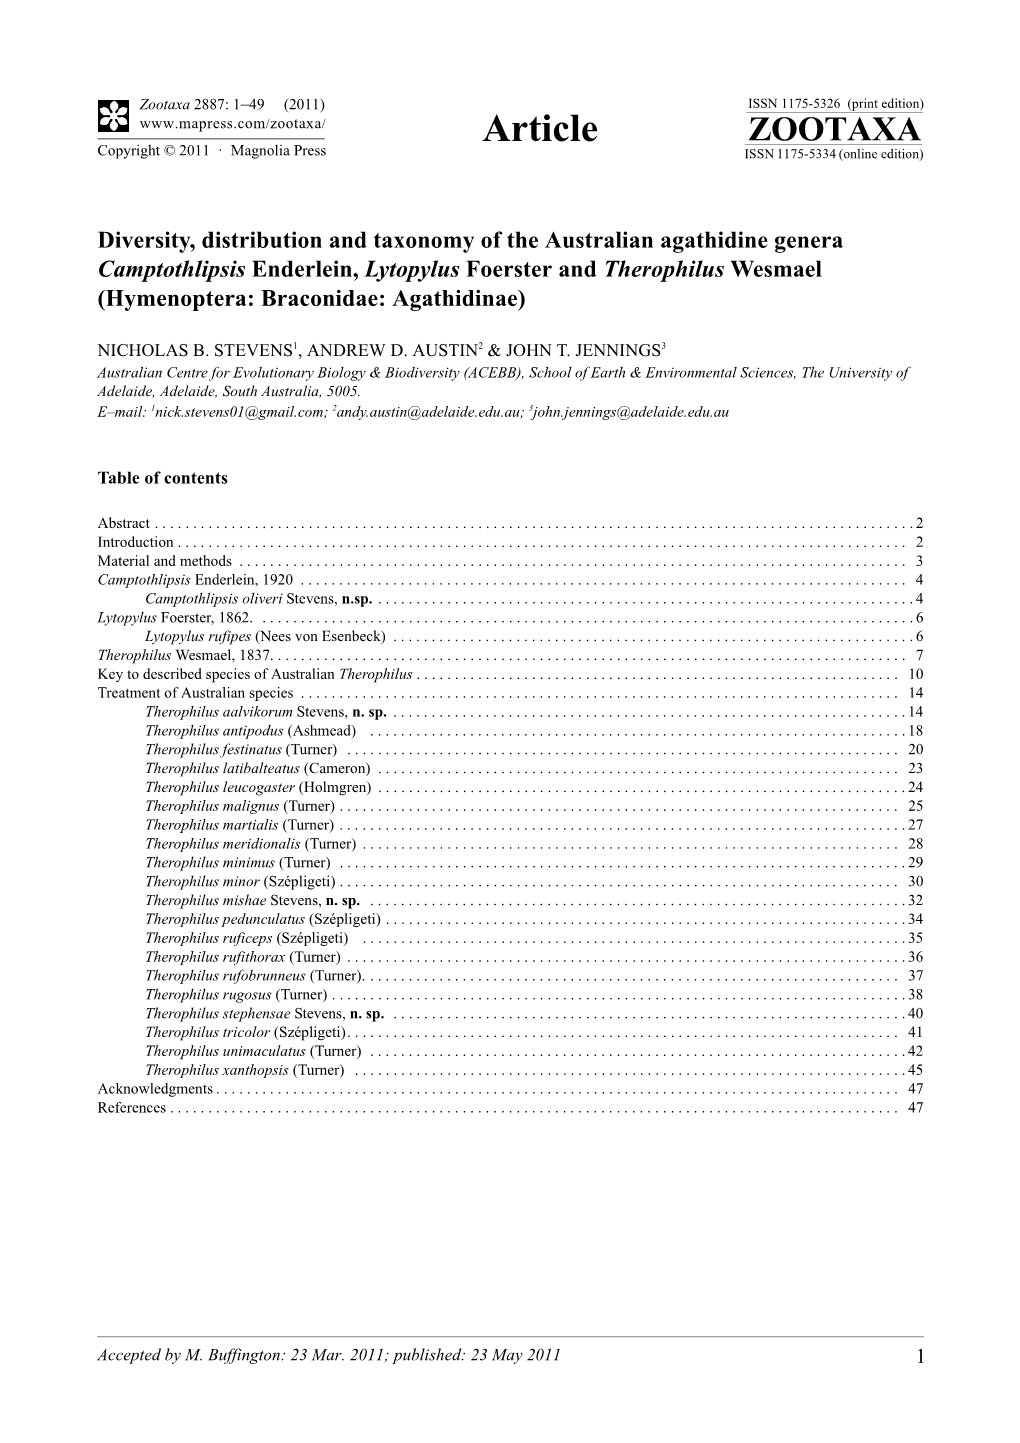 Diversity, Distribution and Taxonomy of the Australian Agathidine Genera